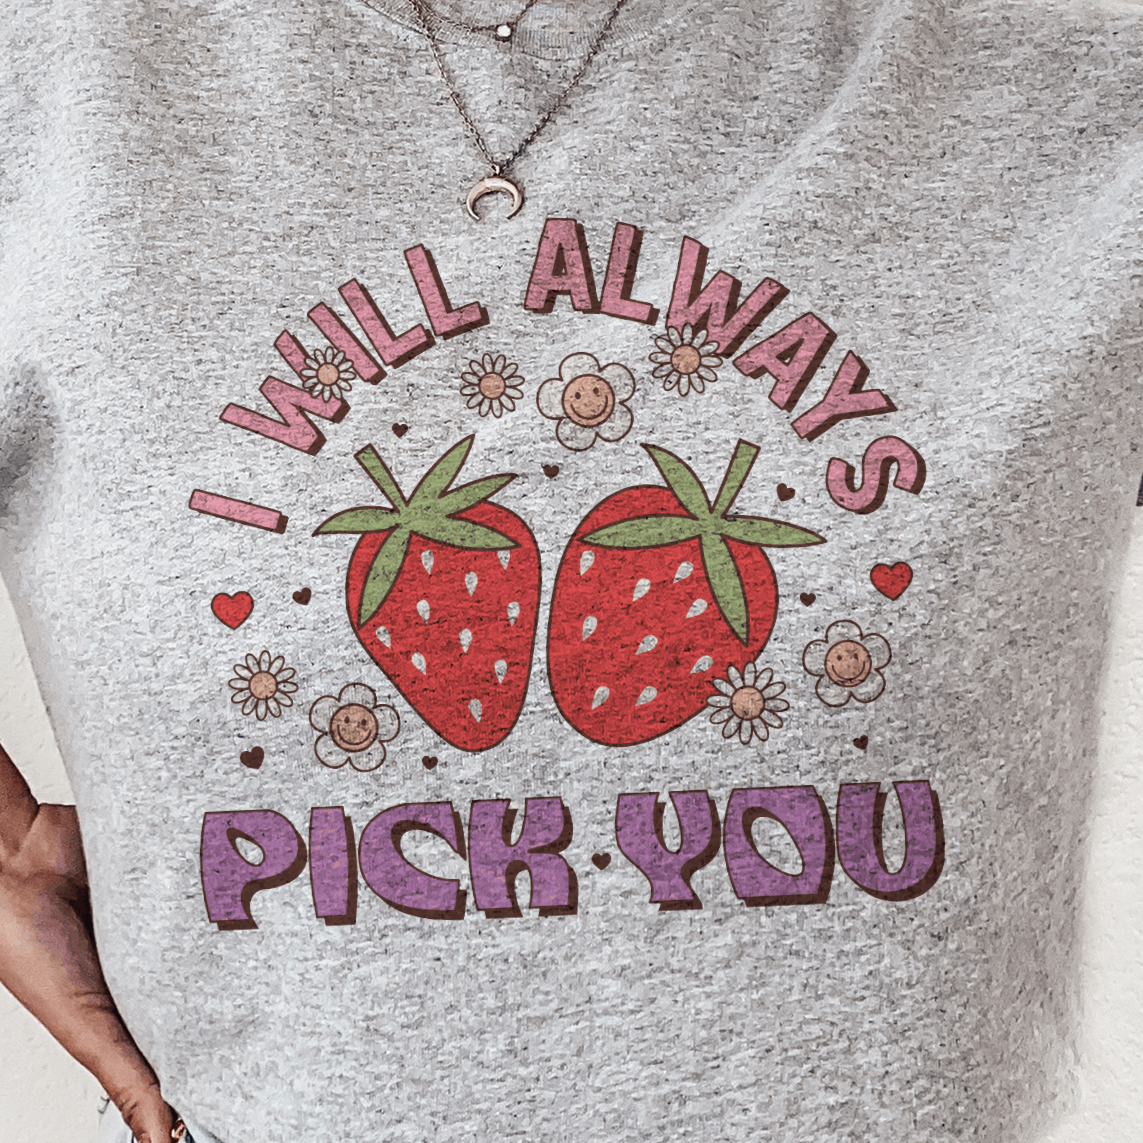 Sweet Strawberry 'I Will Always Pick You' Sweatshirt